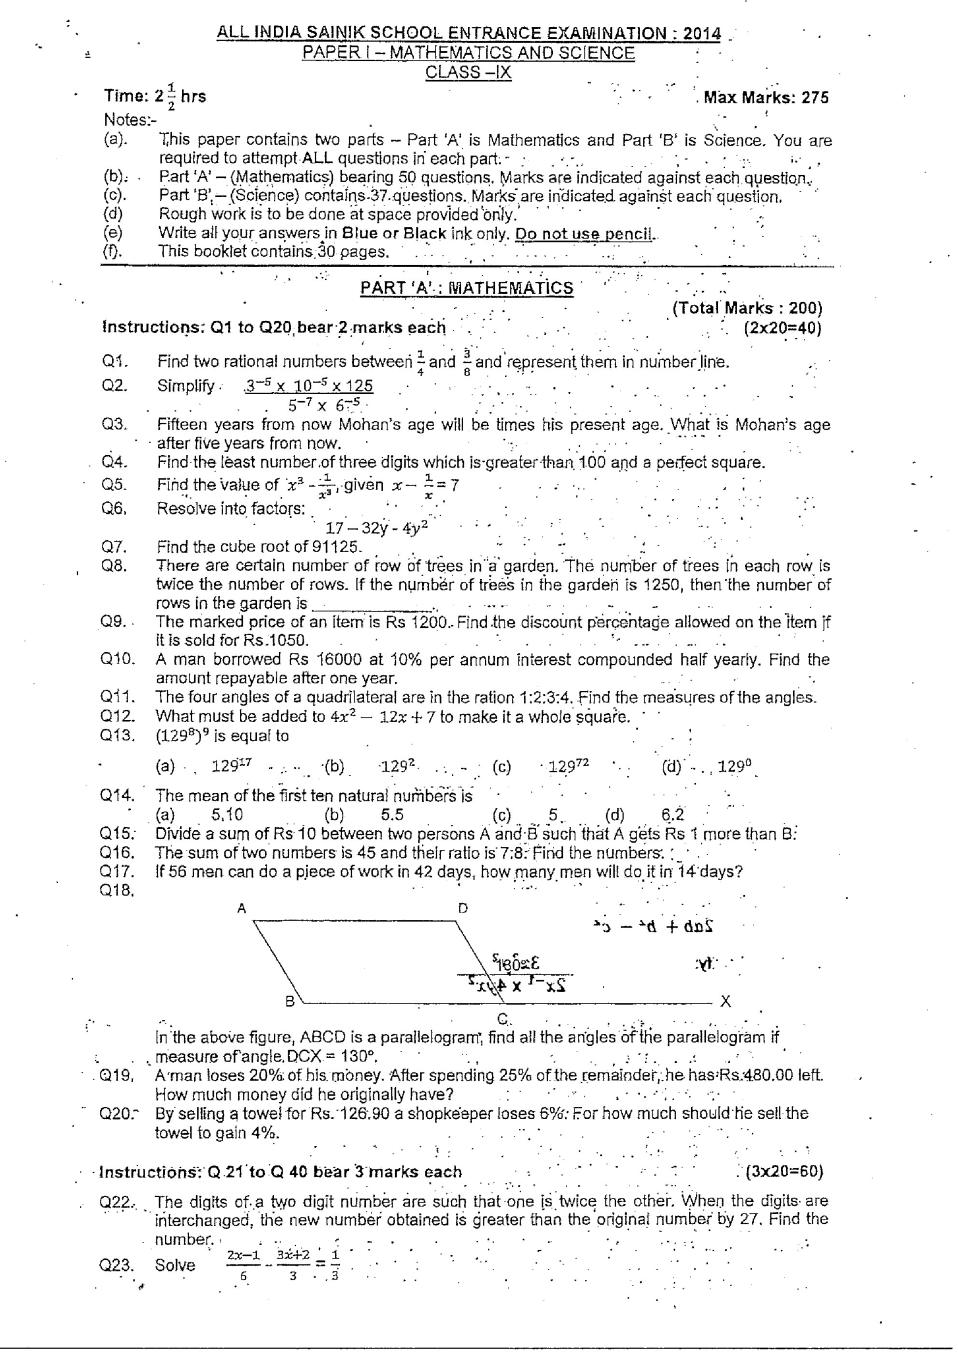 AISSEE 2014 Question Paper for Class 9 | Sainik School Entrance Exam (Paper 1) - Page 1